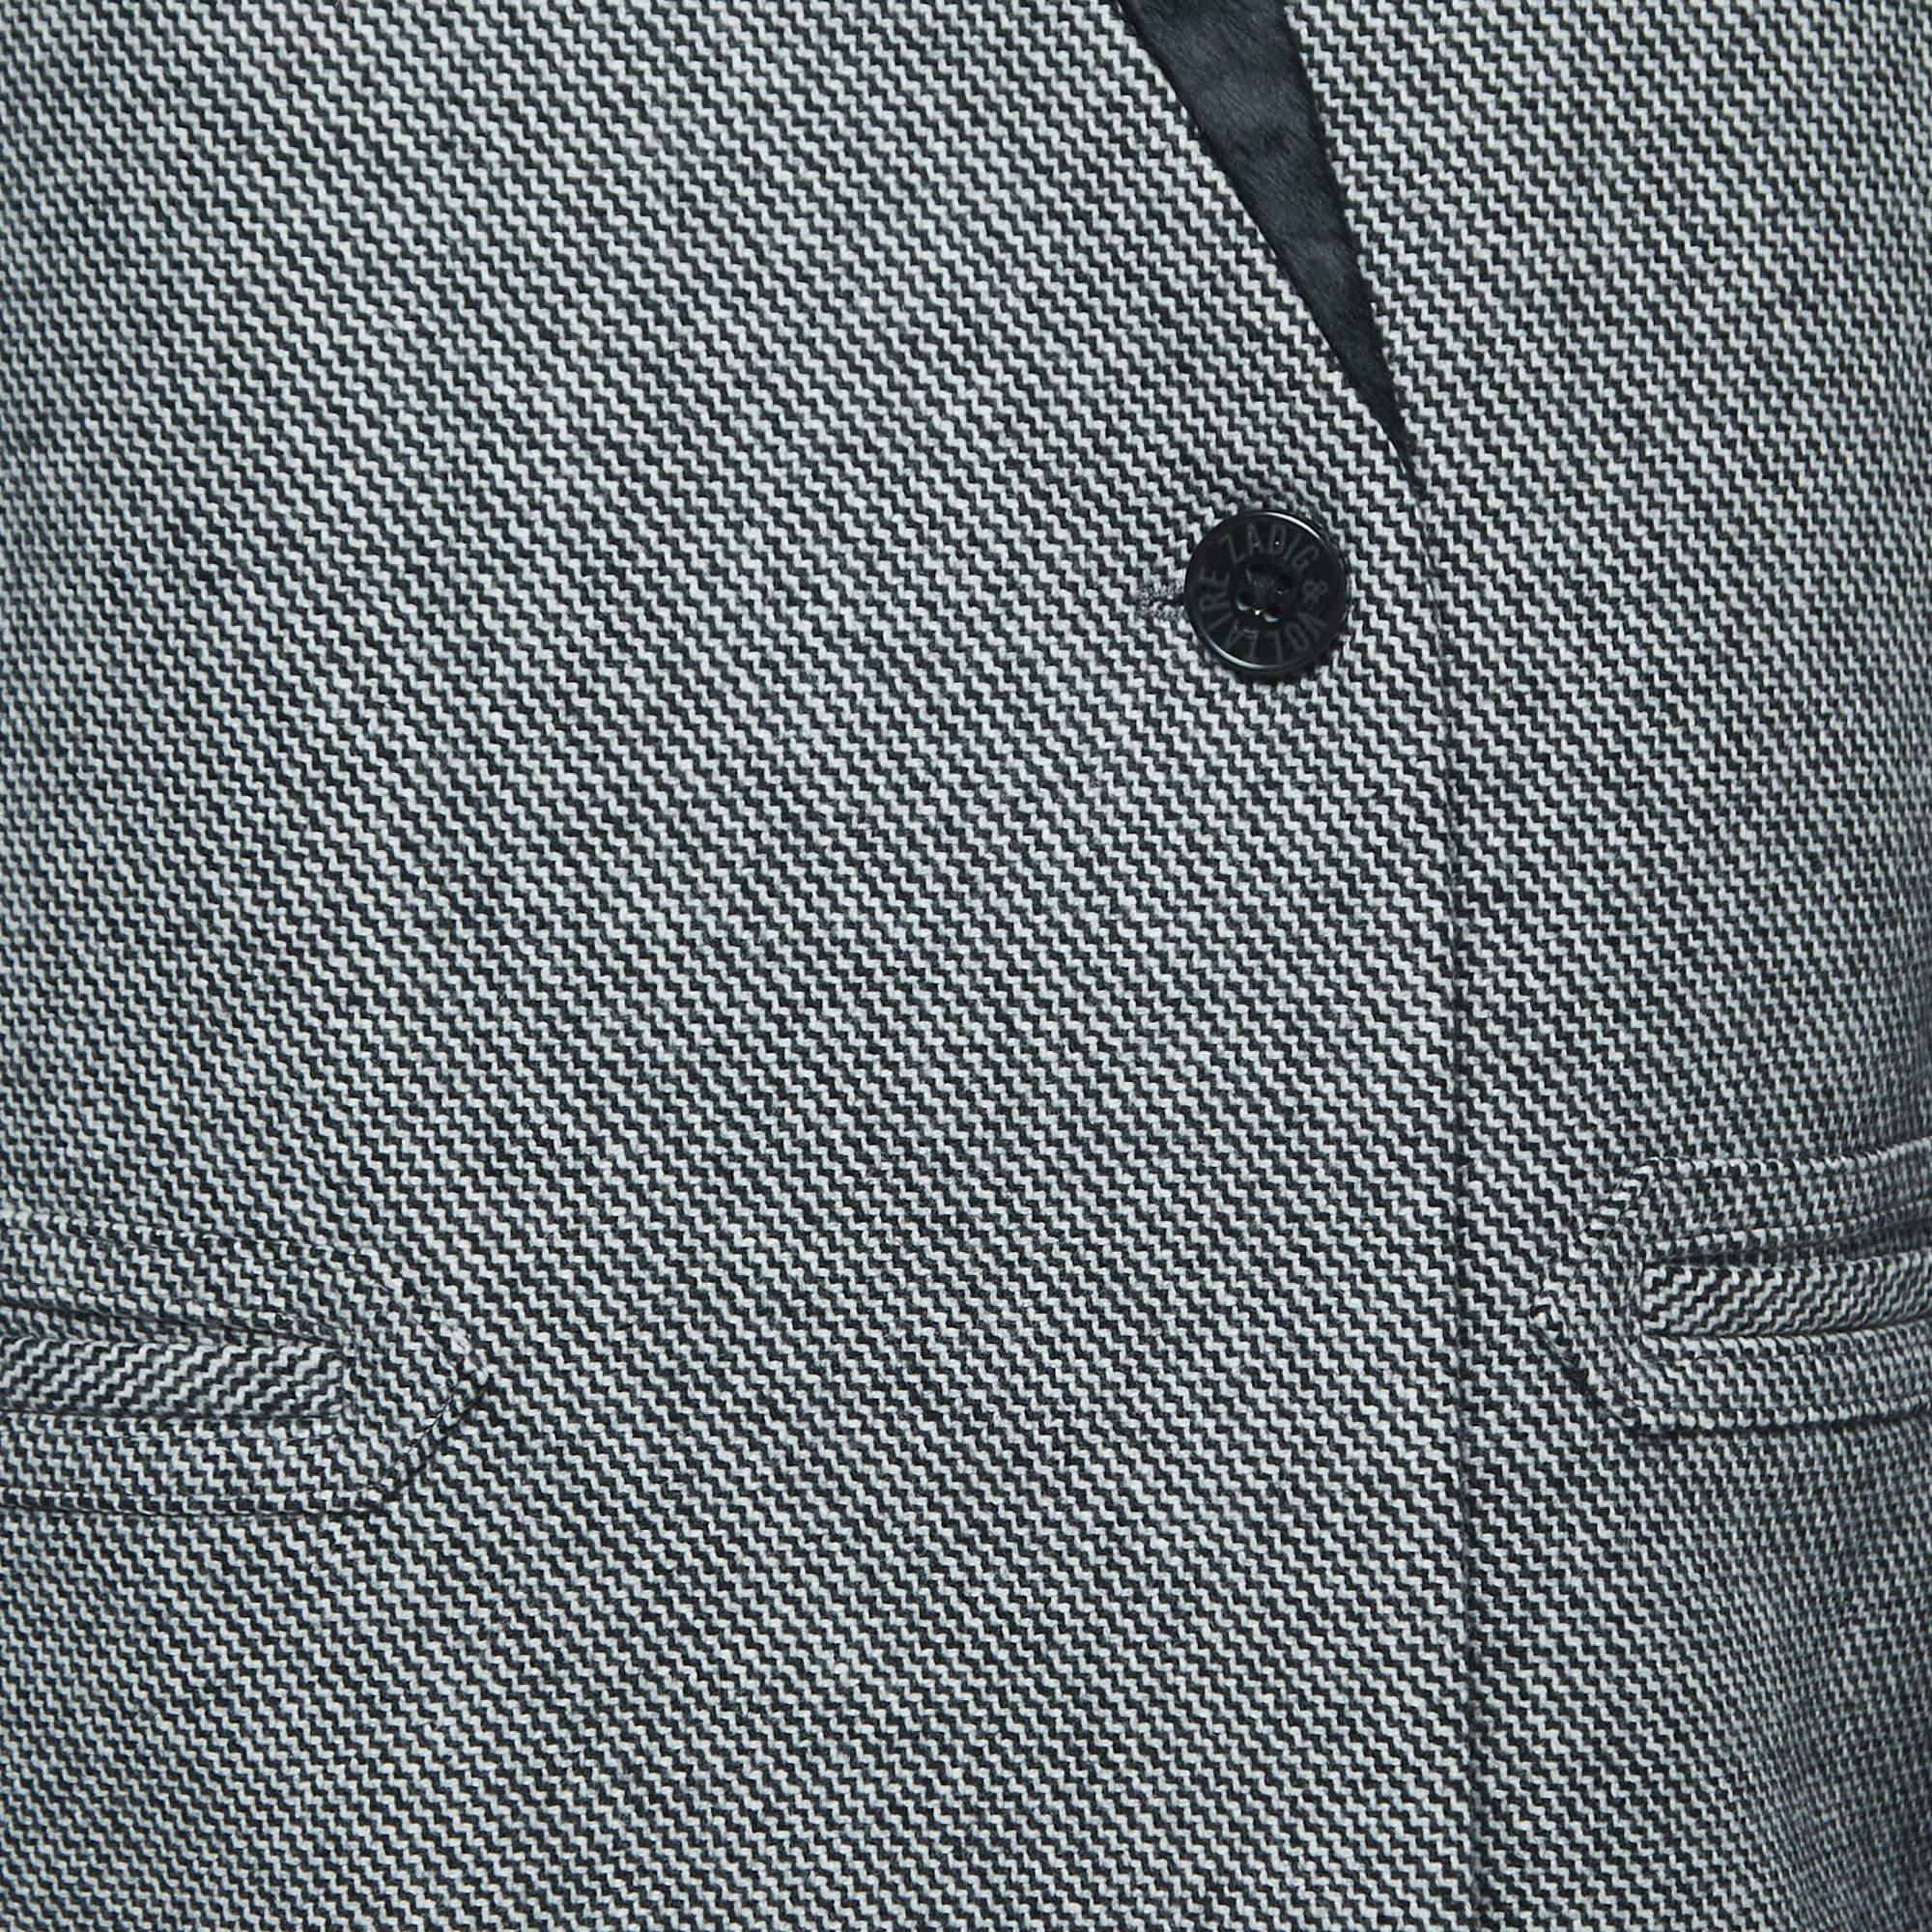 Women's Zadig & Voltaire Black Patterned Wool Panel Trimmed Coat M